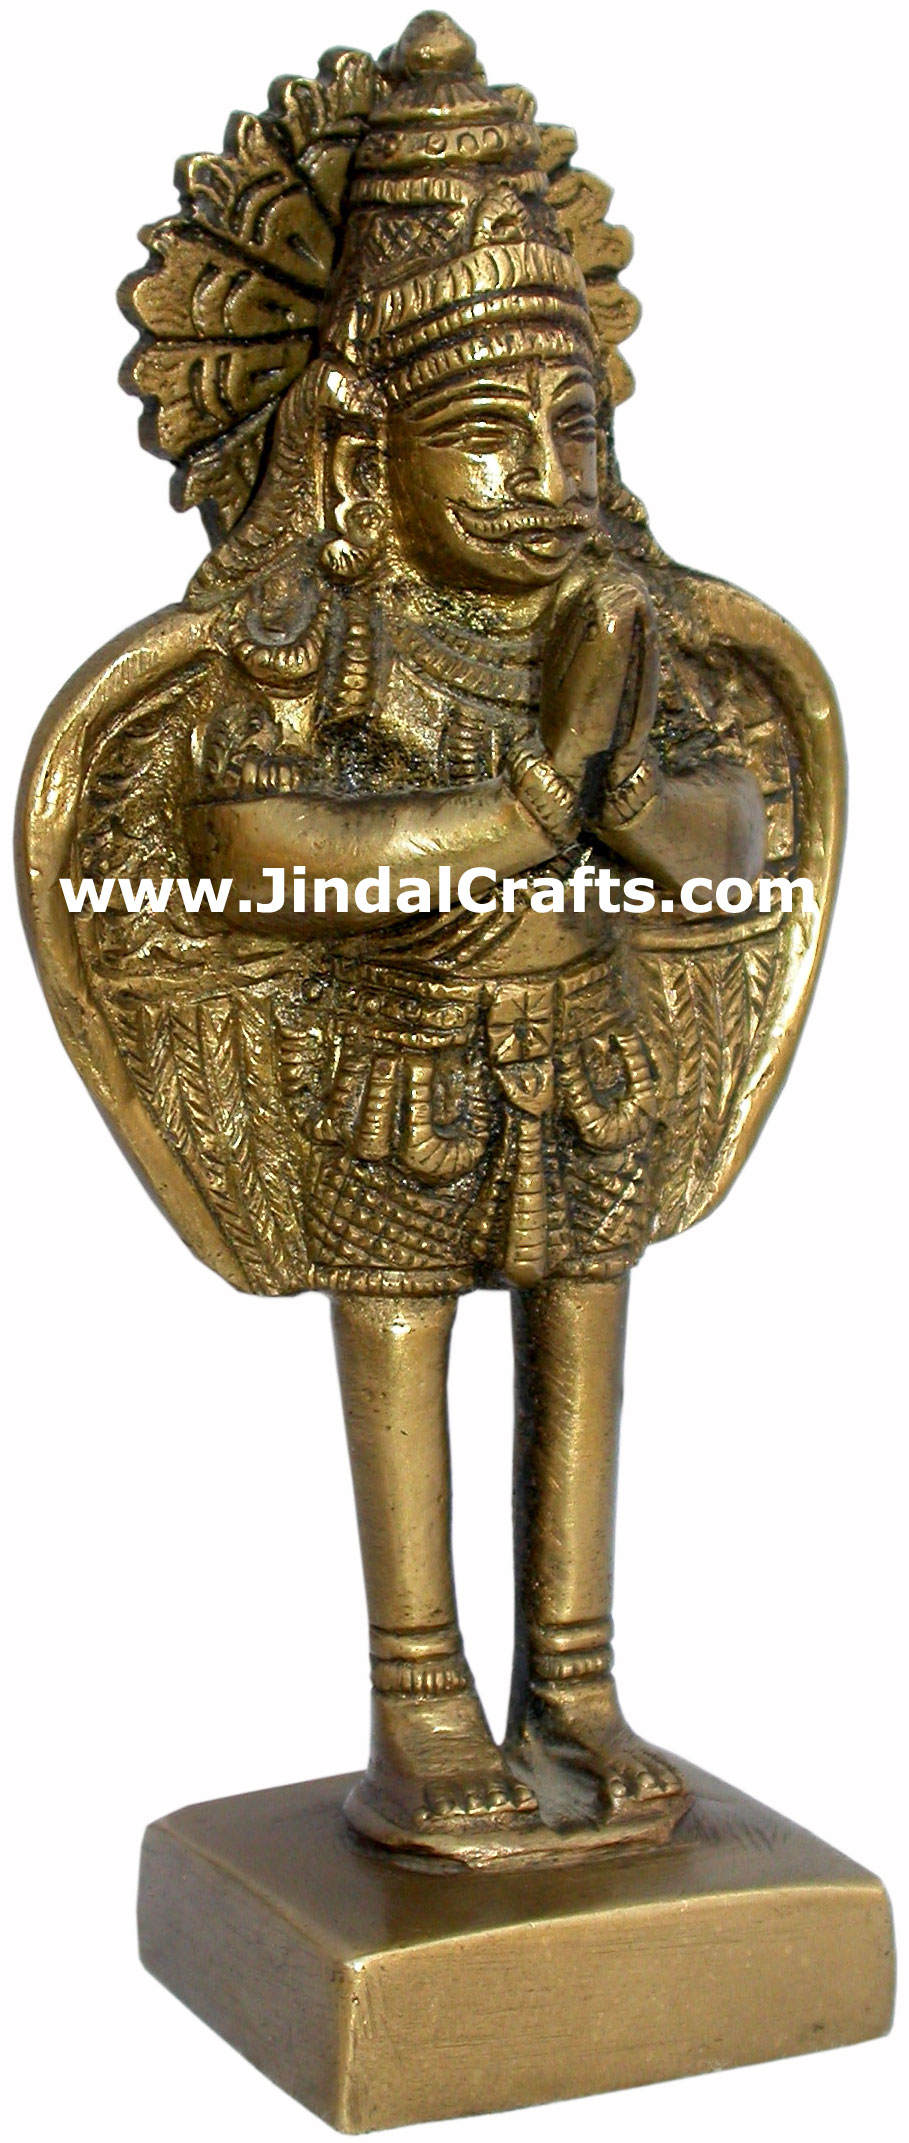 Garud - Hand Carved Indian Art Craft Handicraft Home Decor Brass Figurine